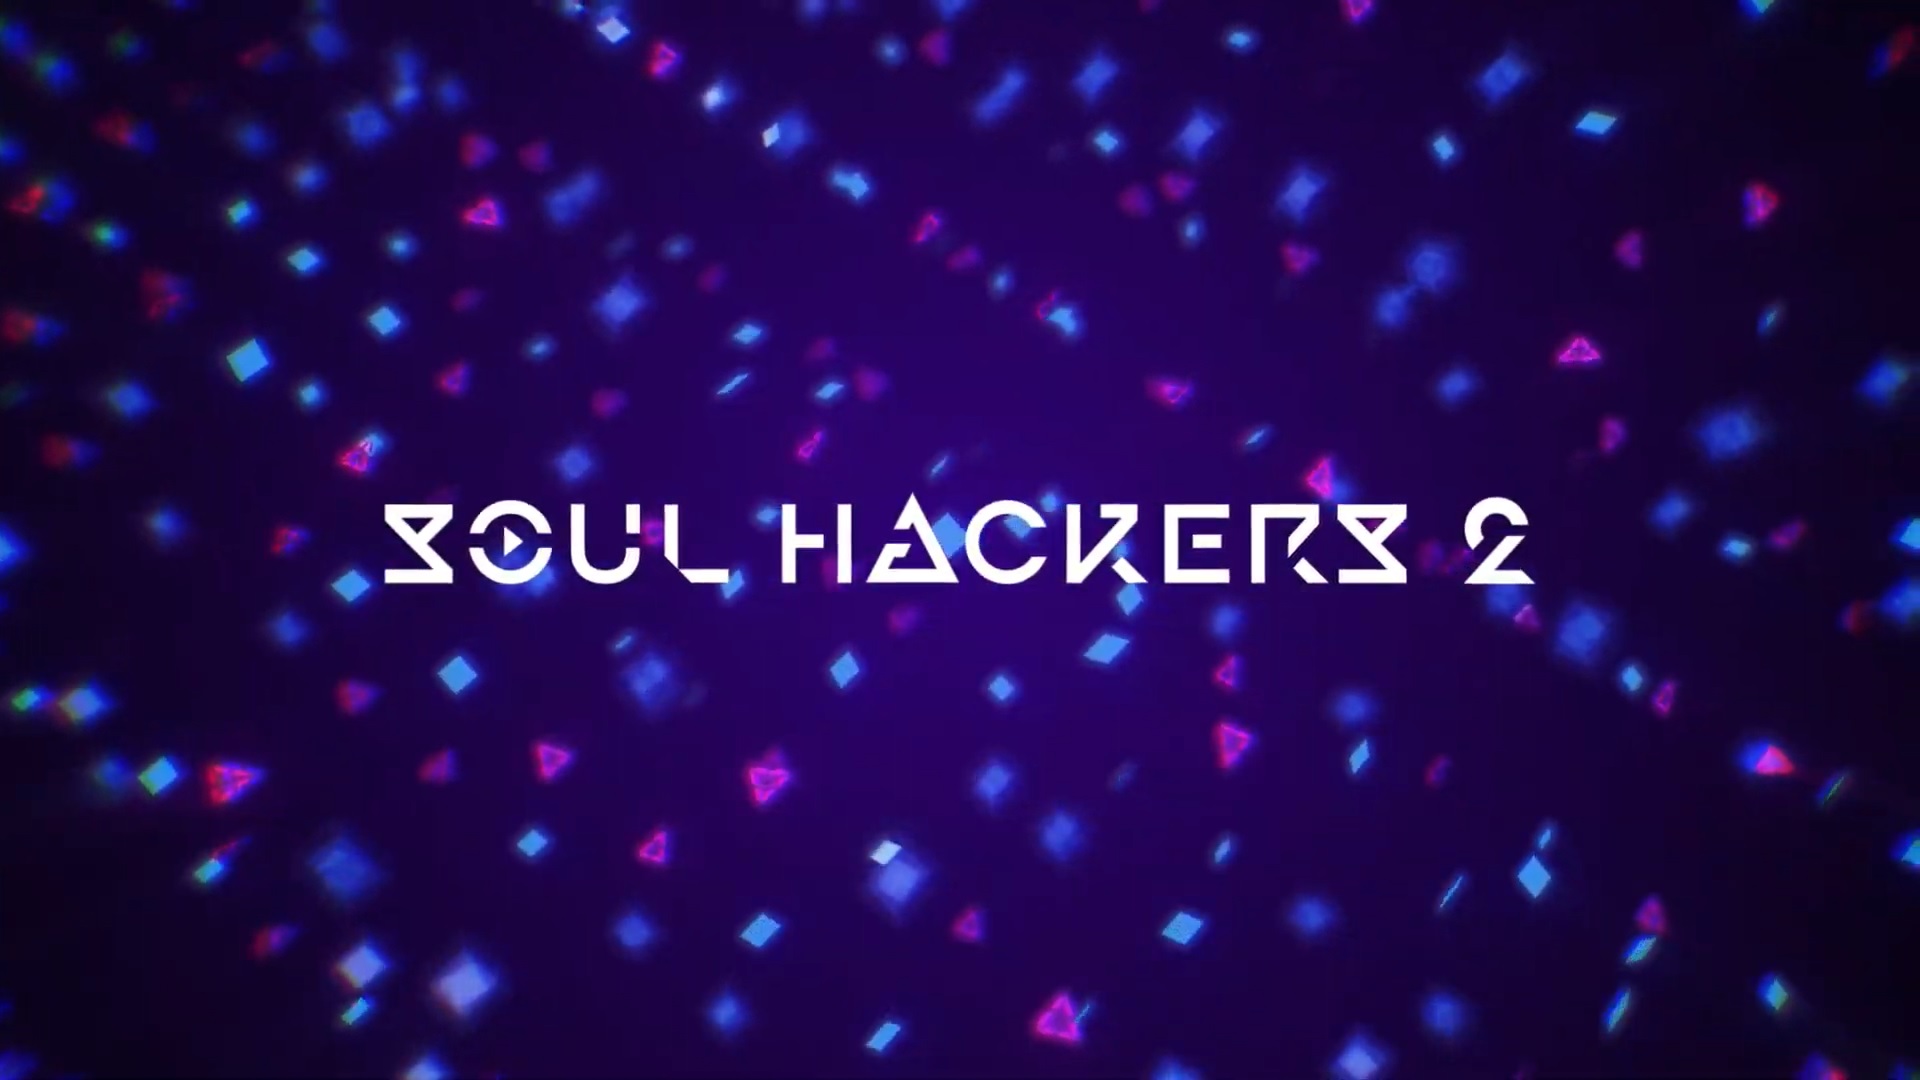 Soul Hackers 2 on Steam